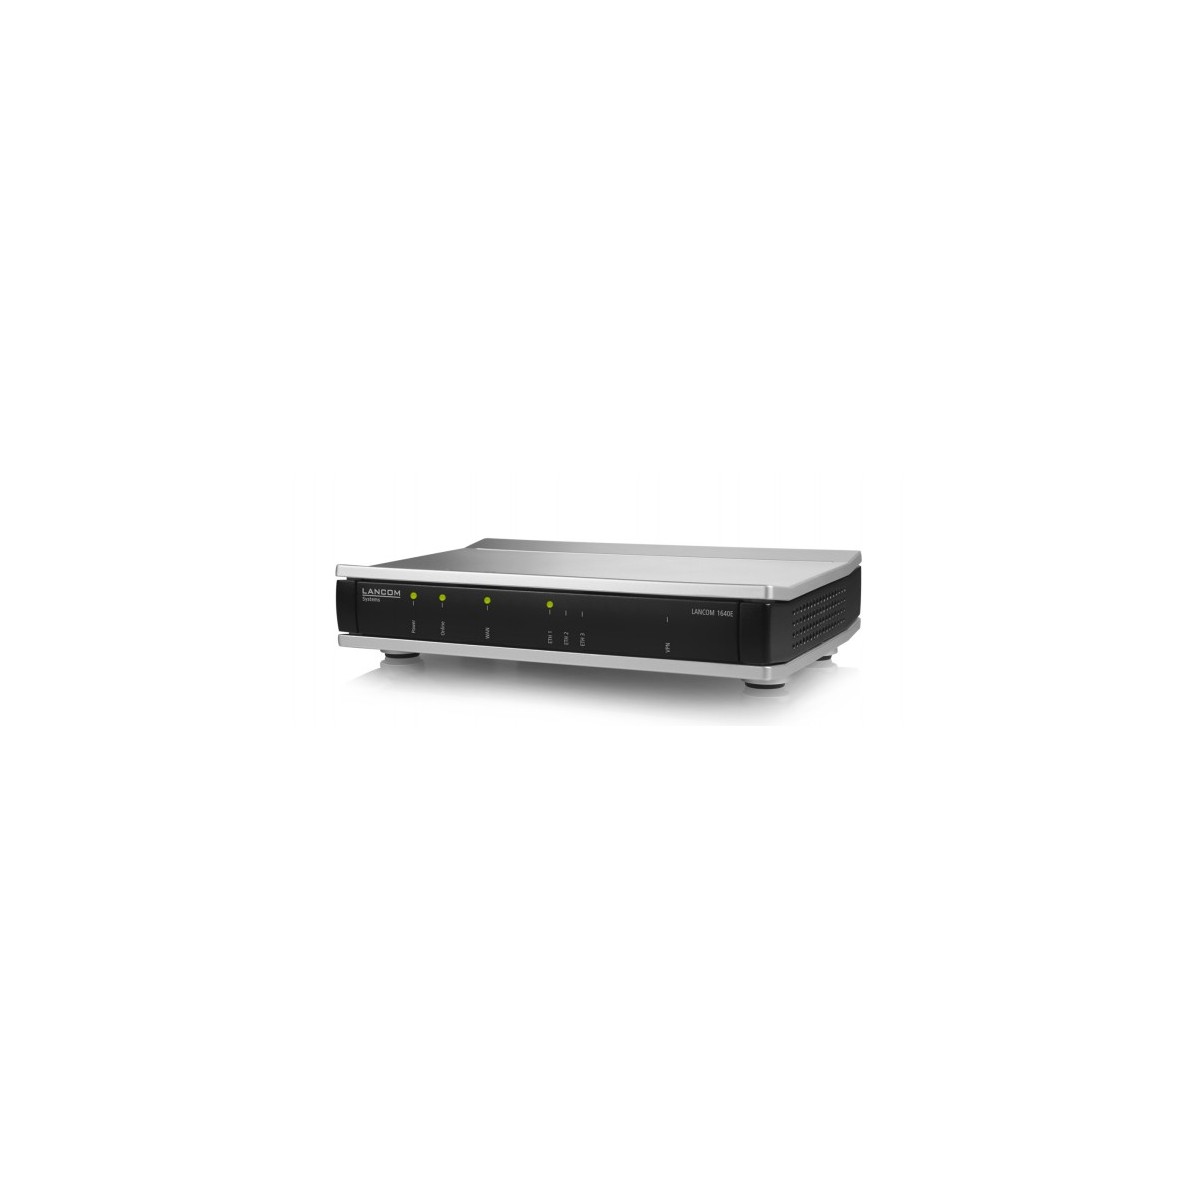 Lancom 1640E (EU) - Ethernet WAN - Gigabit Ethernet - Black,Silver